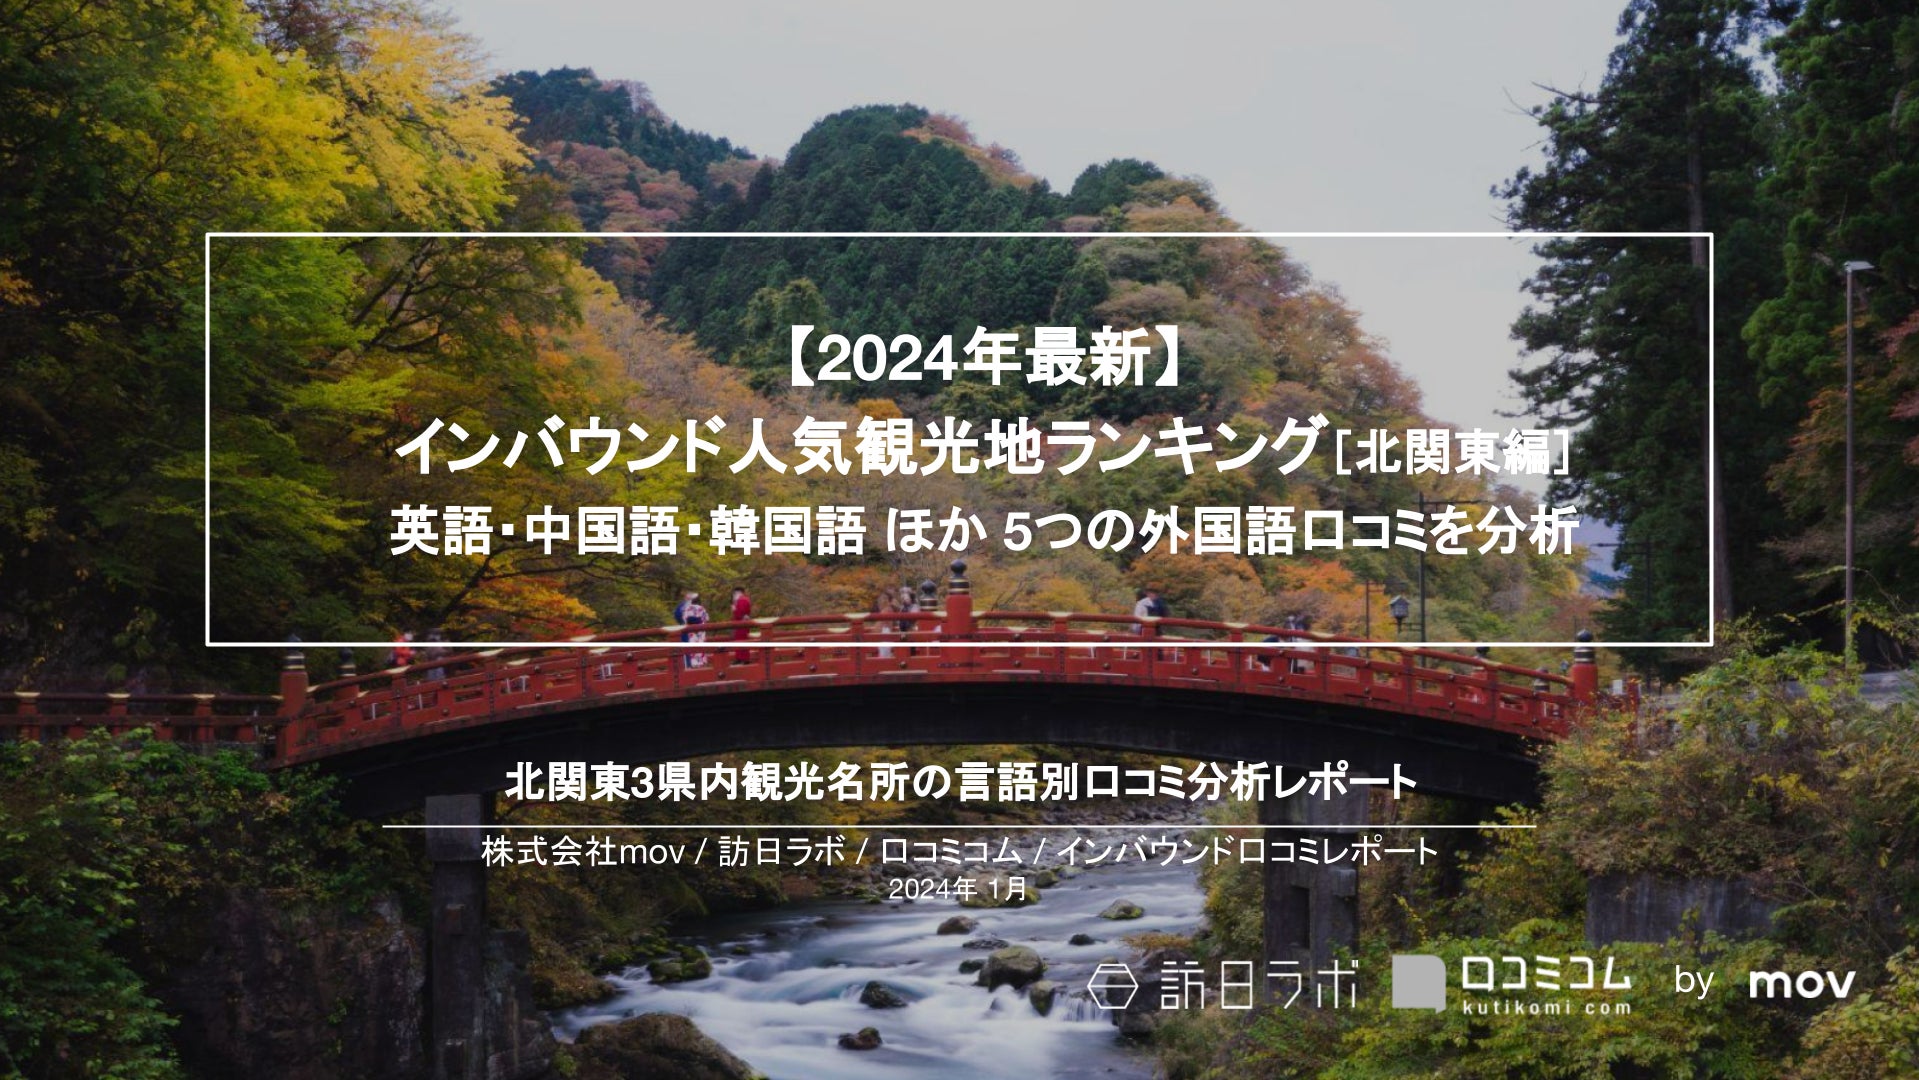 Vpon JAPAN 第4回 観光経営力強化セミナーに出展